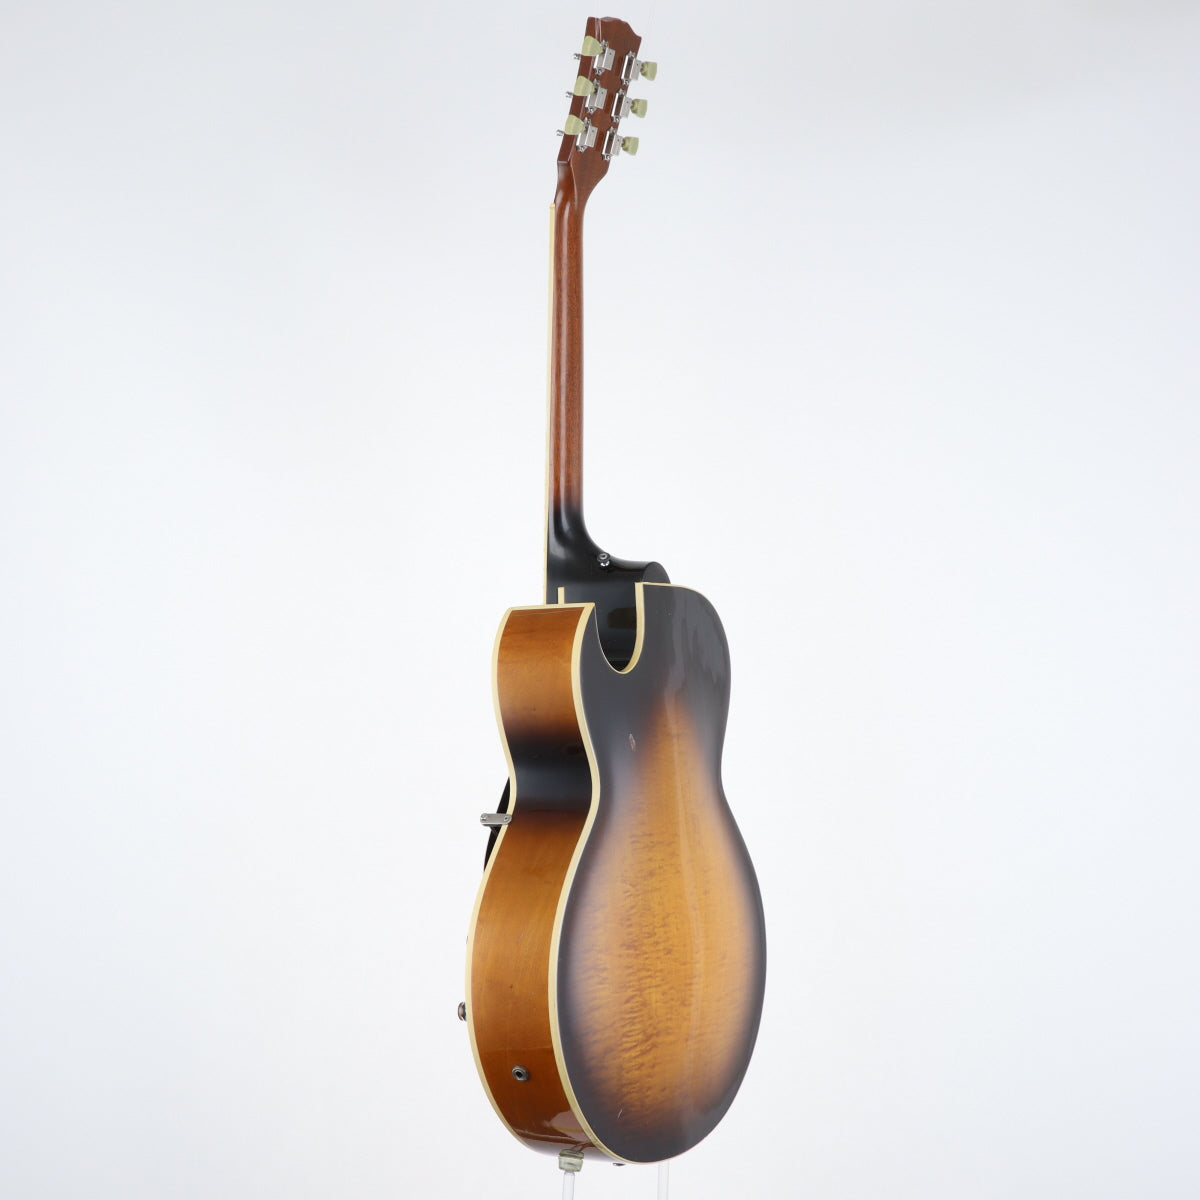 [SN 94052661] USED Gibson USA Gibson / 1992 ES-175 Vintage Sunburst [20]